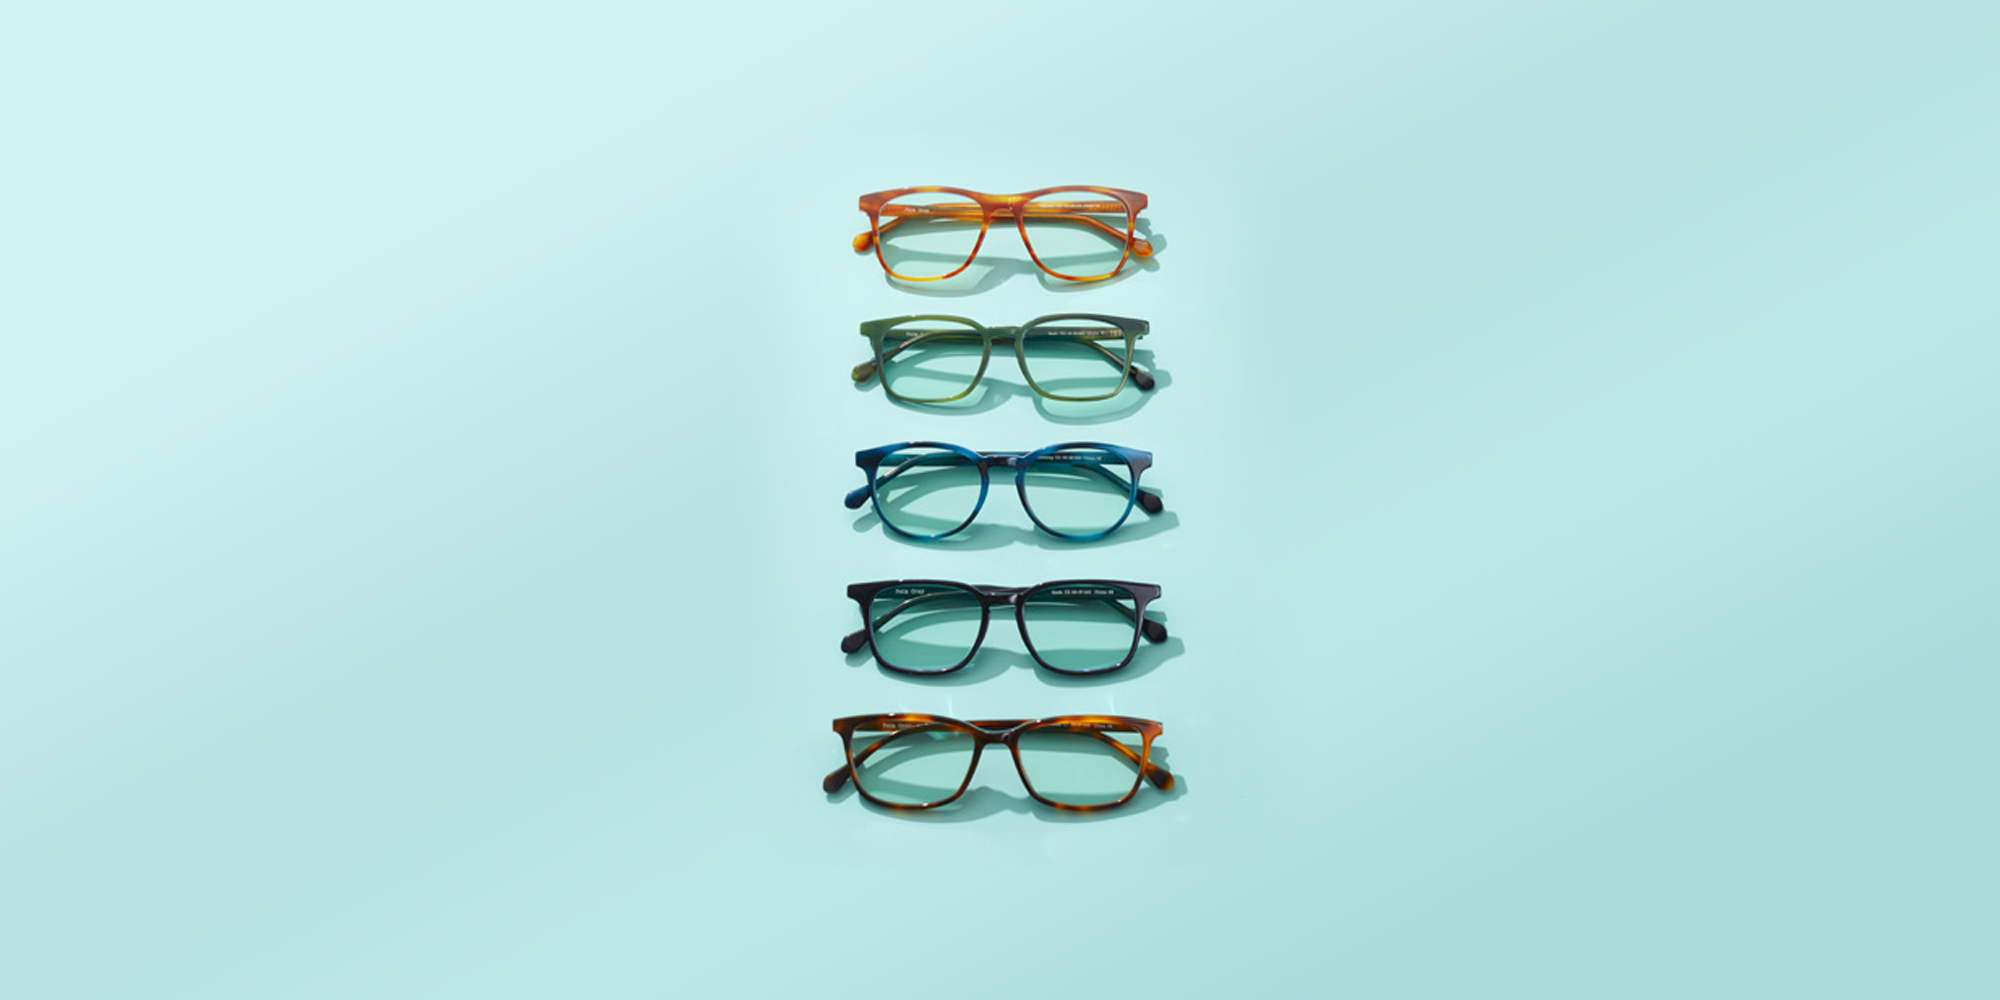 Best Places to Buy Eyeglasses Online